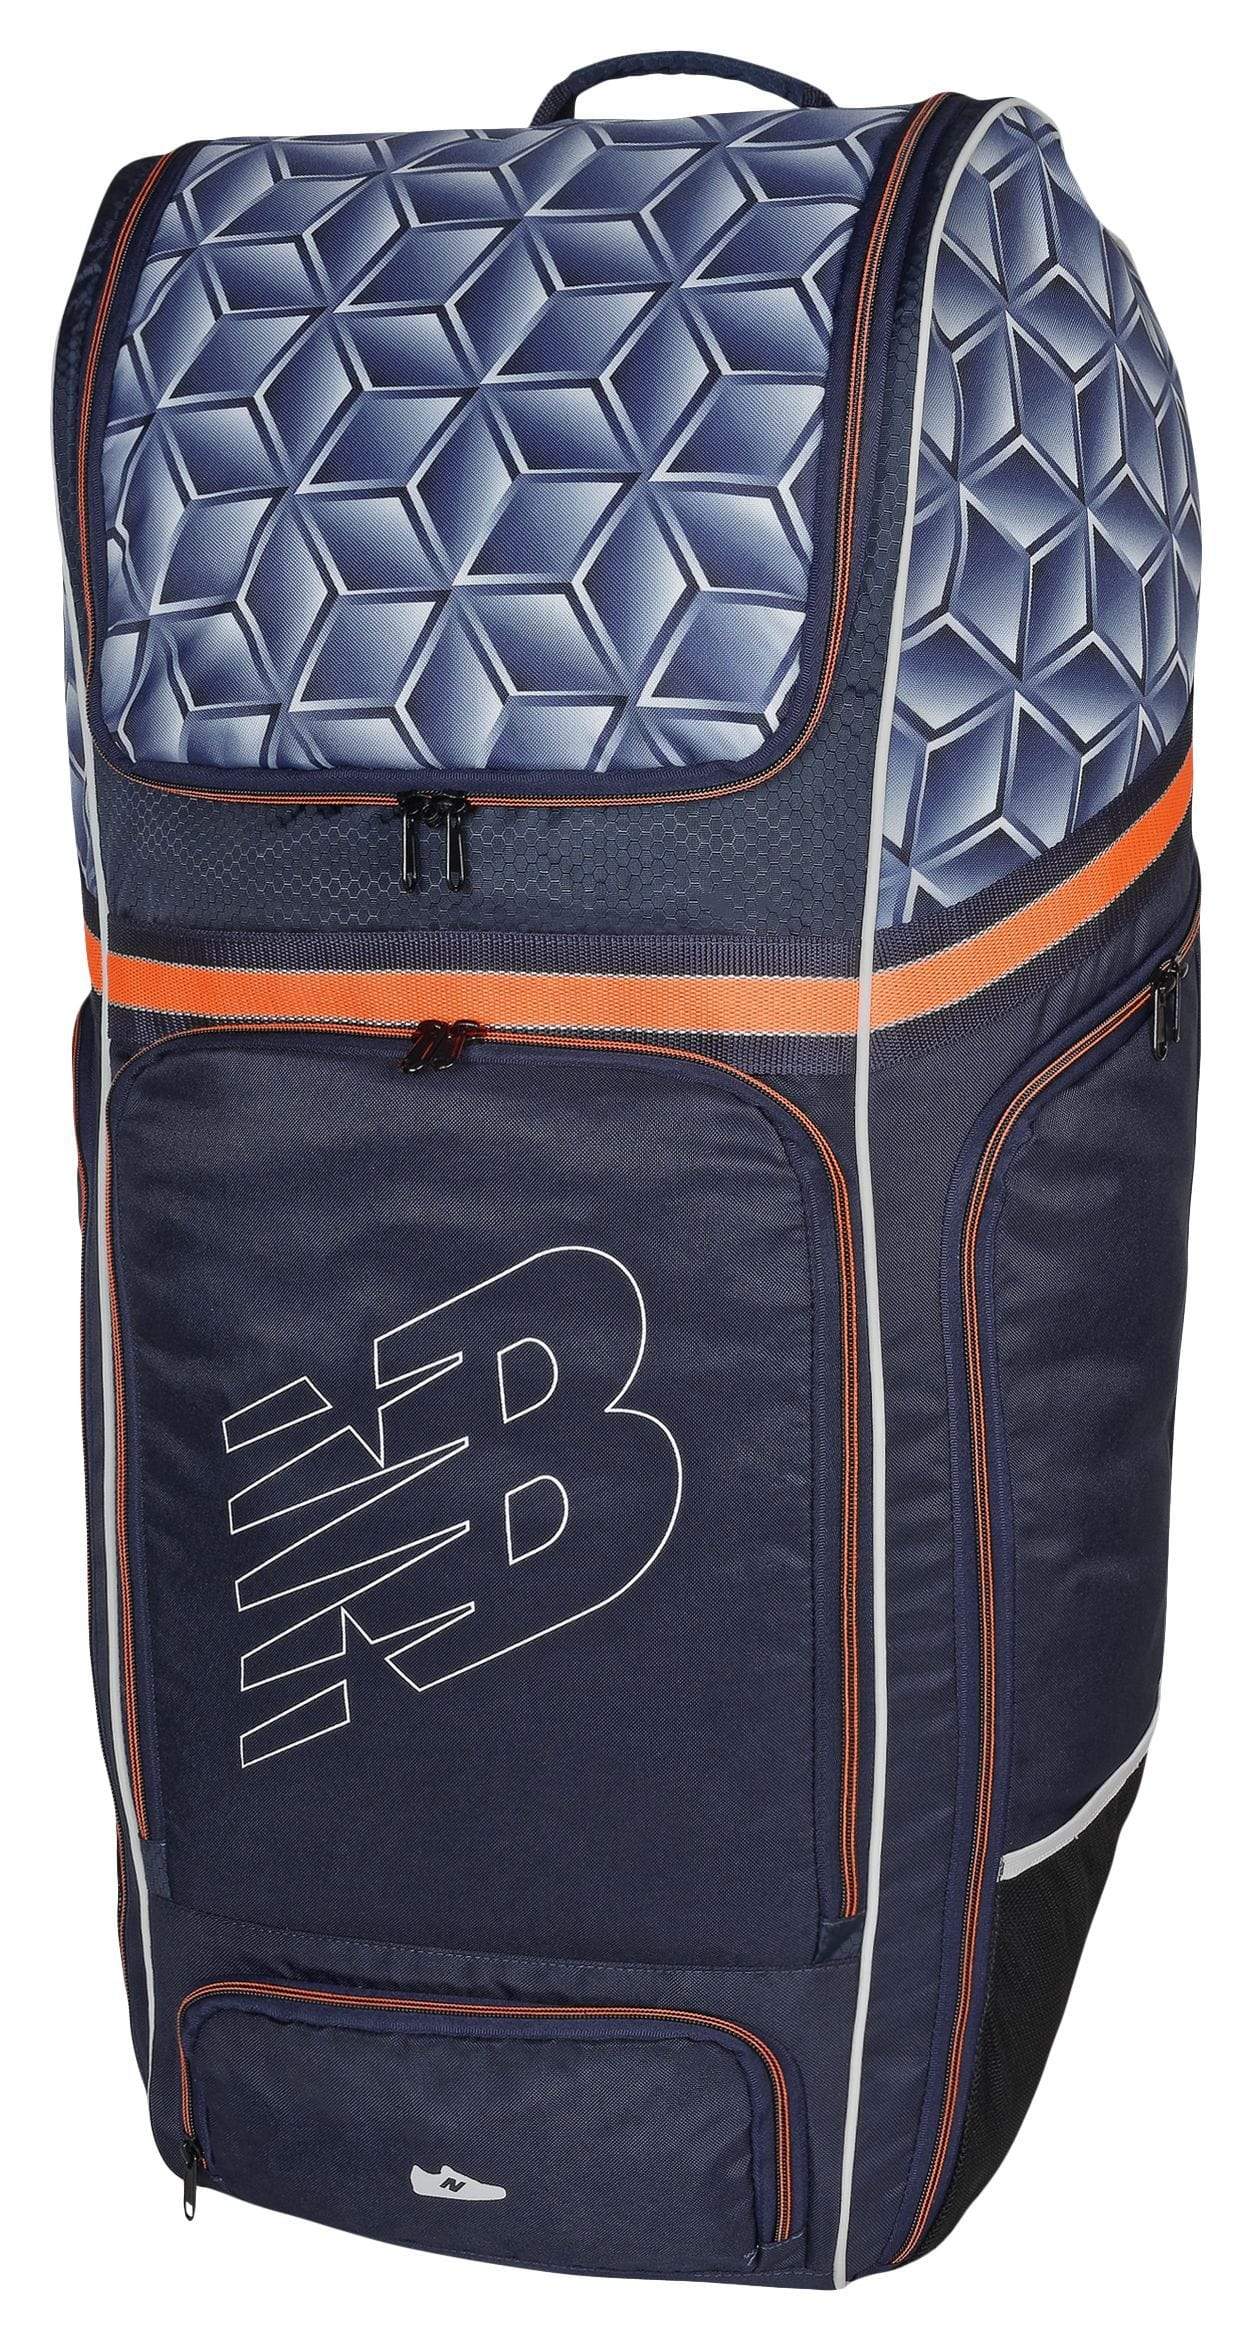 New Balance Cricket Bags New Balance DC1080 Duffle Cricket Bag